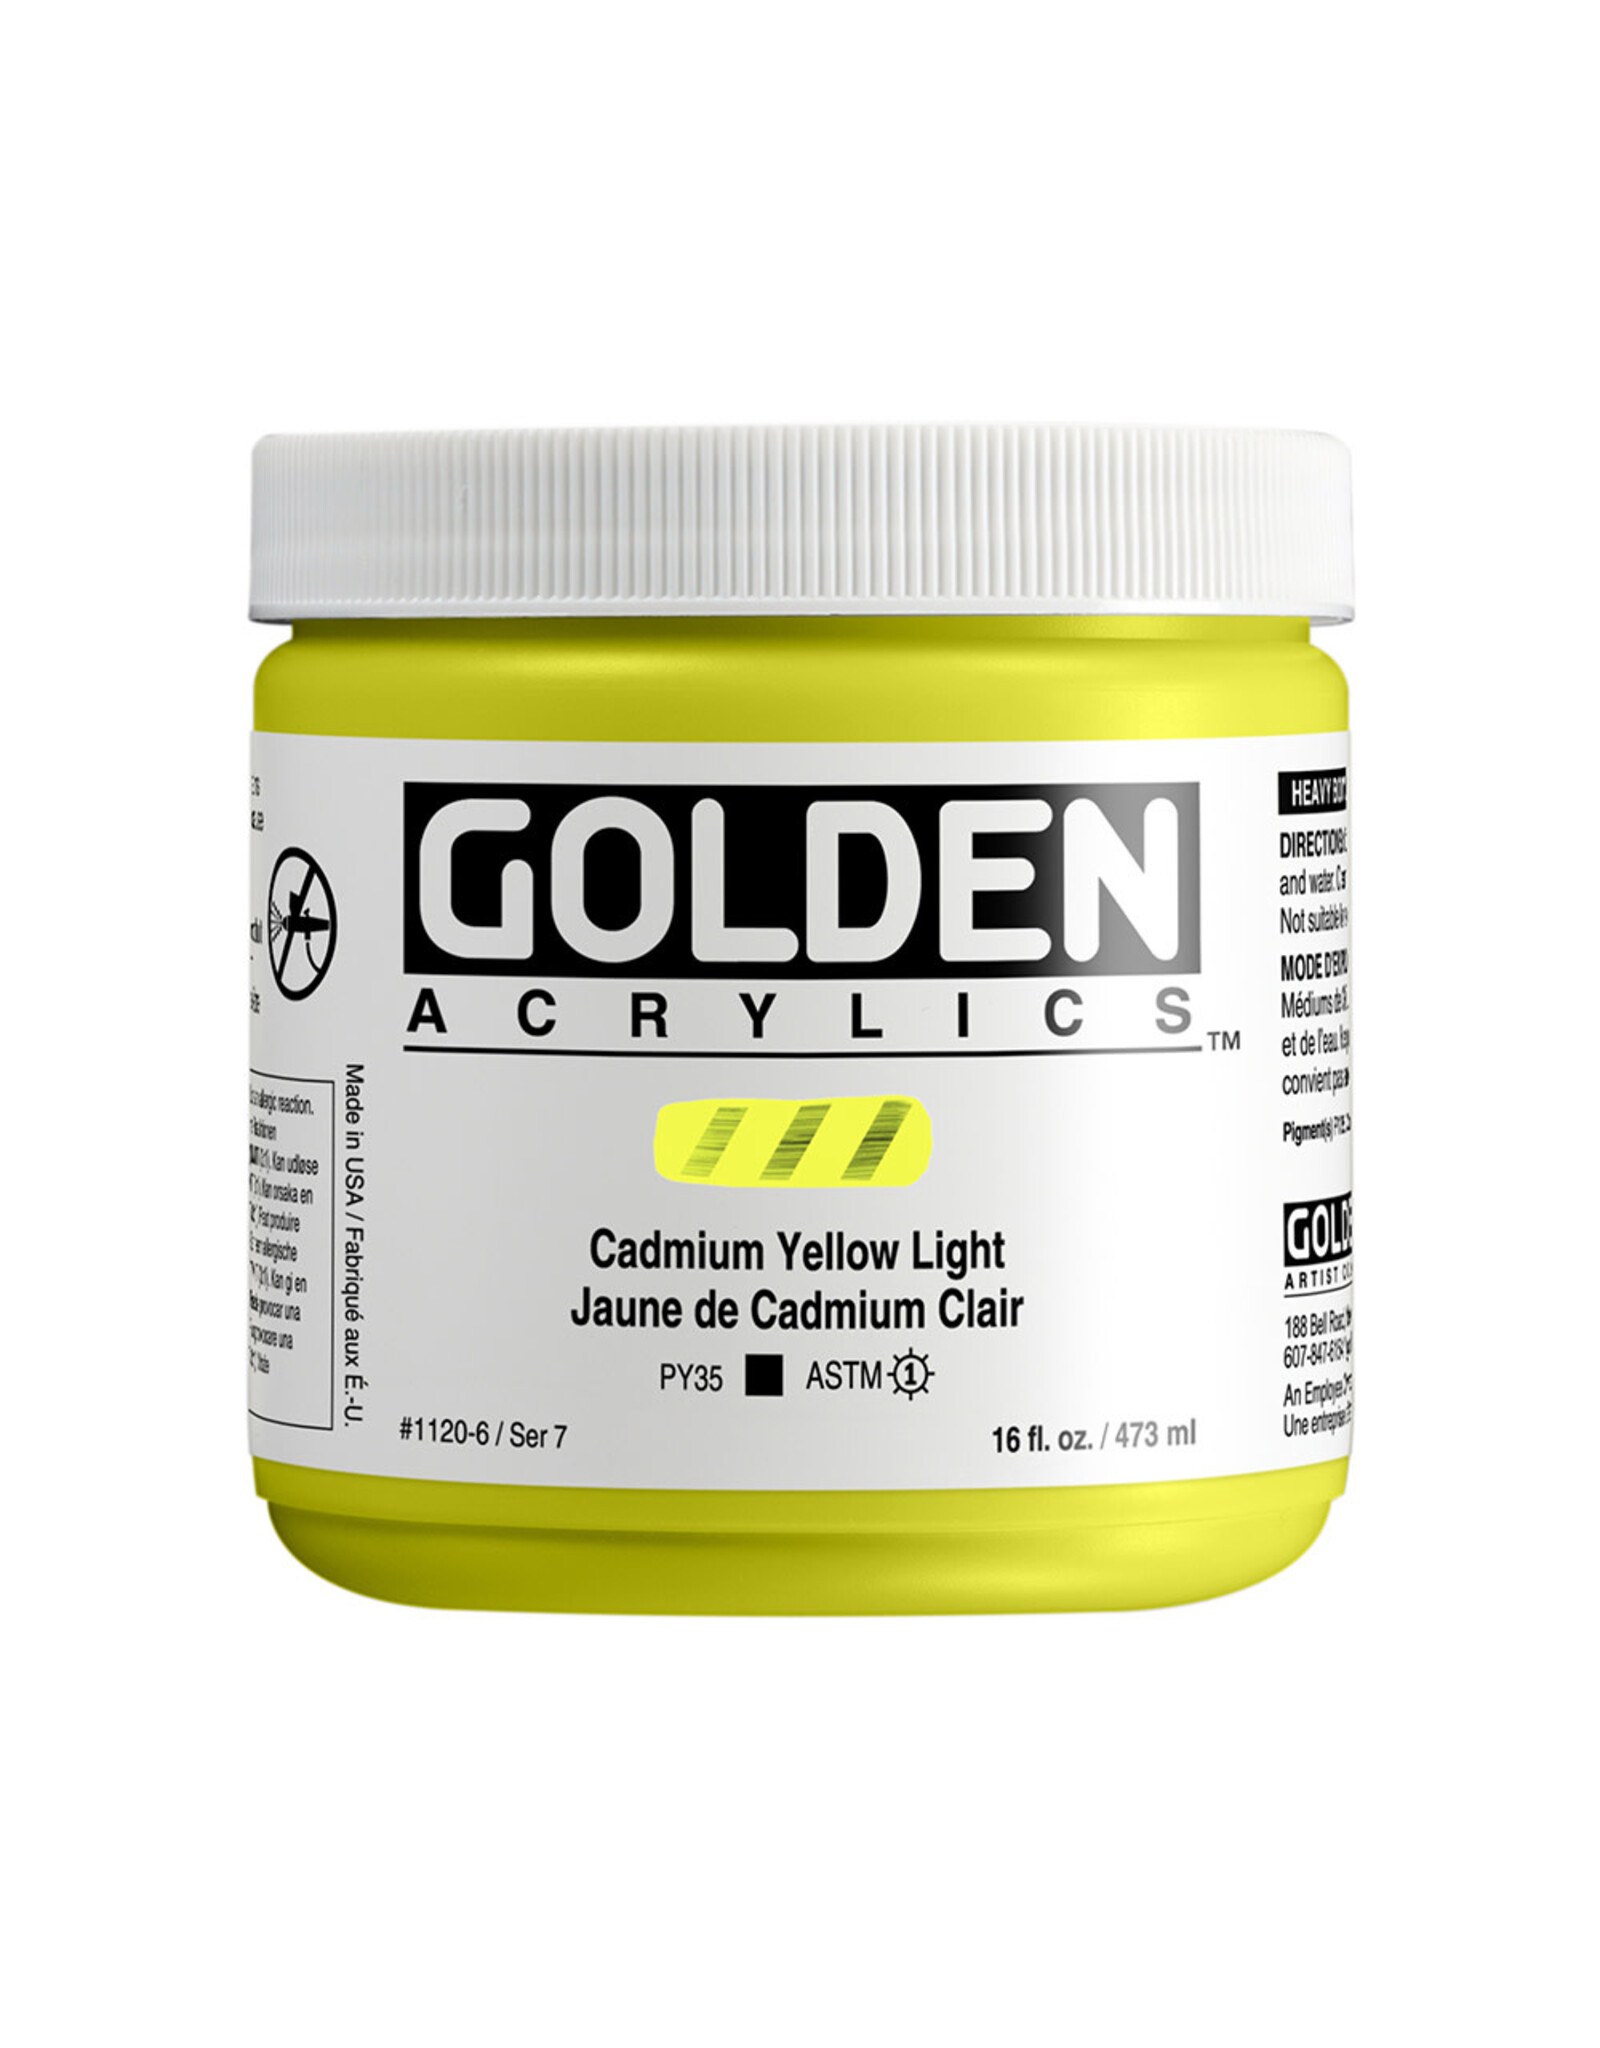 Golden Heavy Body Acrylic Paint, C.P. Cadmium Yellow Light, 16oz - The Art  Store/Commercial Art Supply